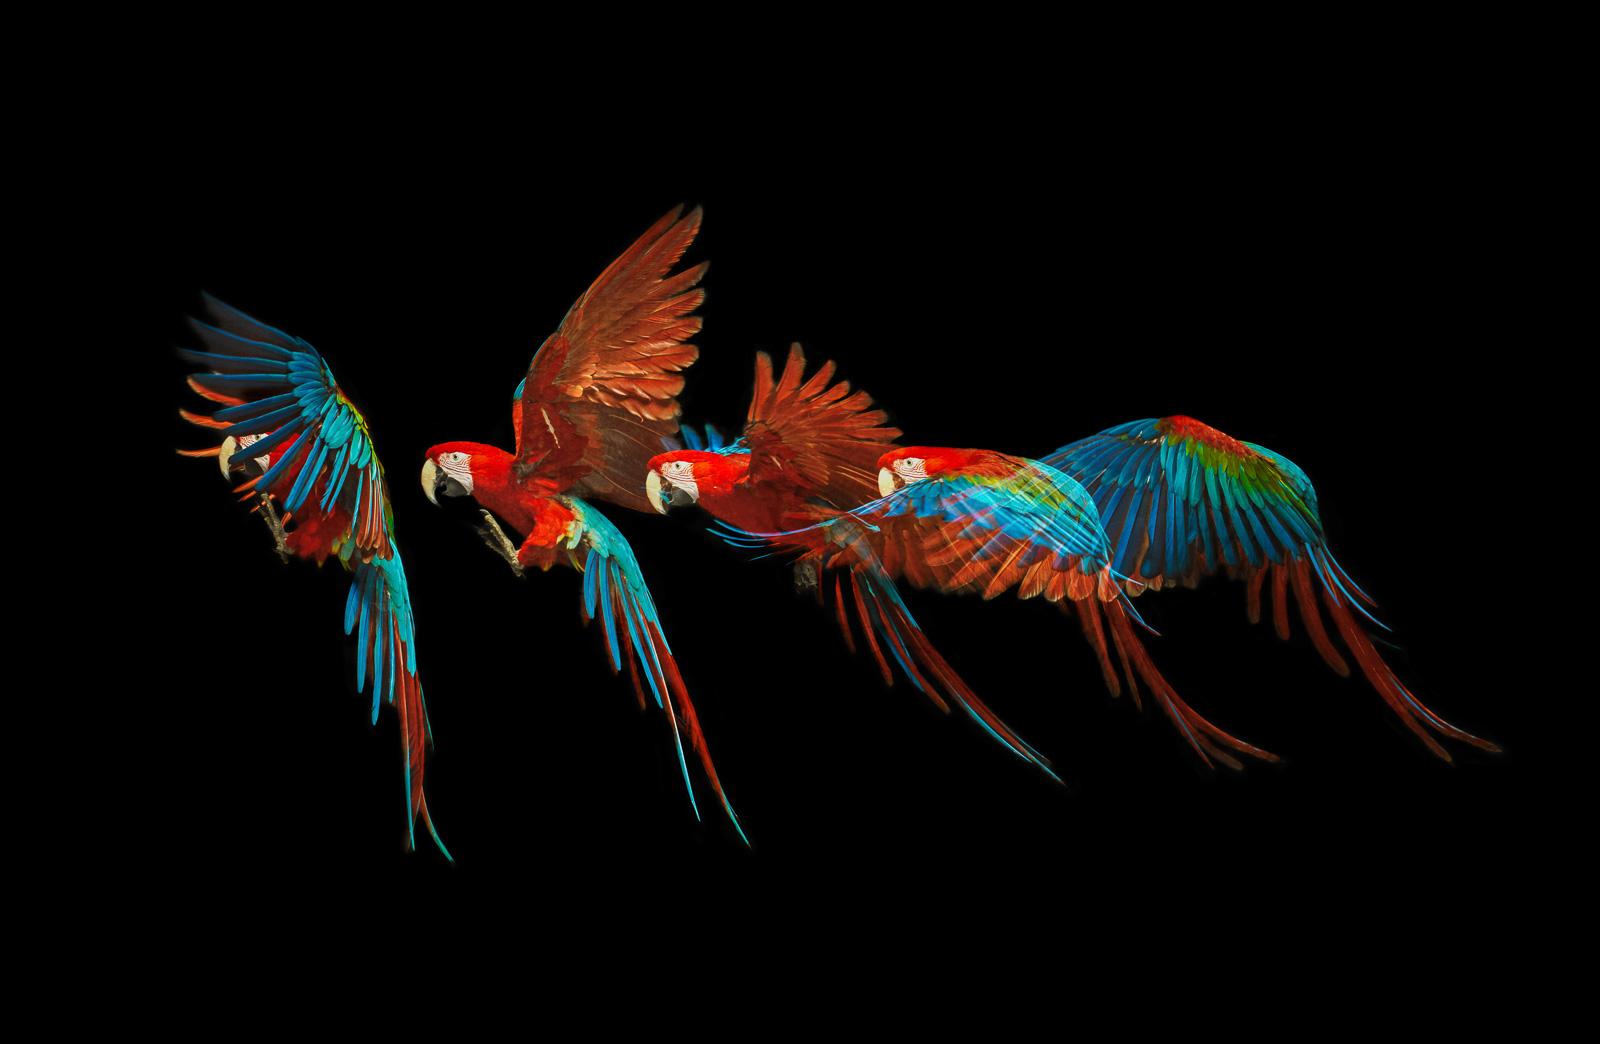 Tim Platt Color Photograph - Macaw #1 -Animal signed limited edition bird contemporary fine art print, Blue